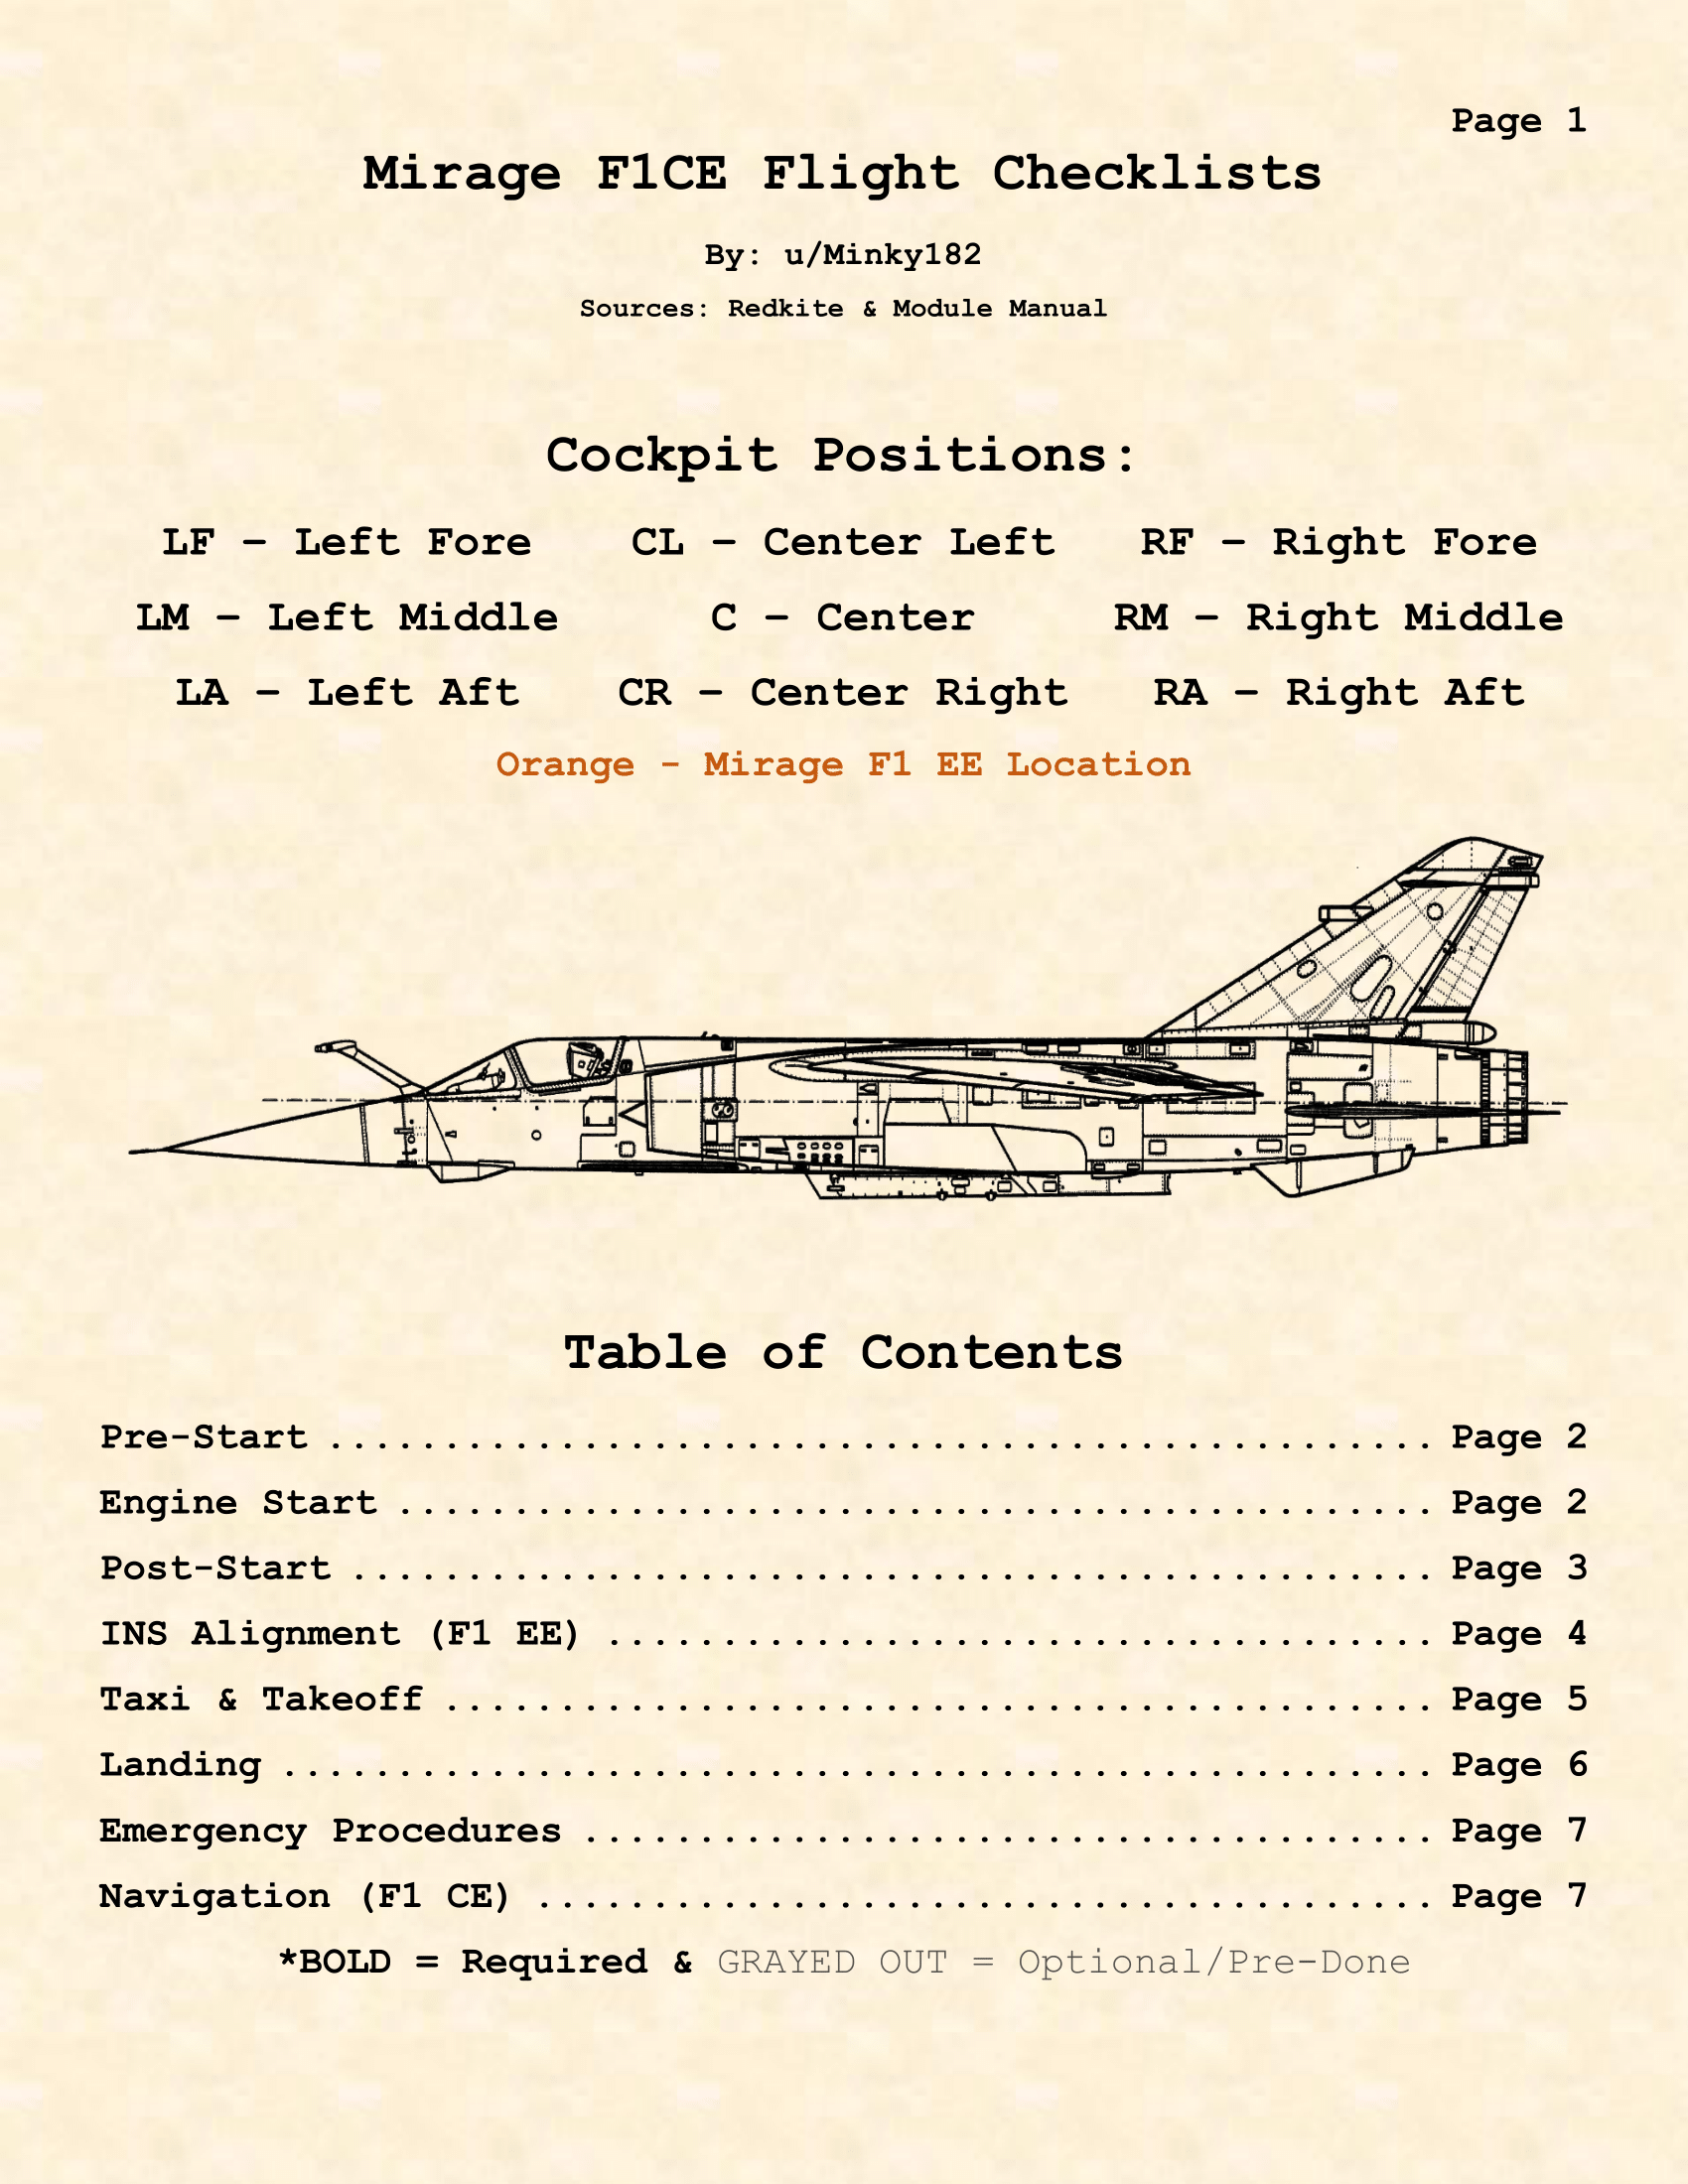 Mirage F1 Kneeboard Checklists